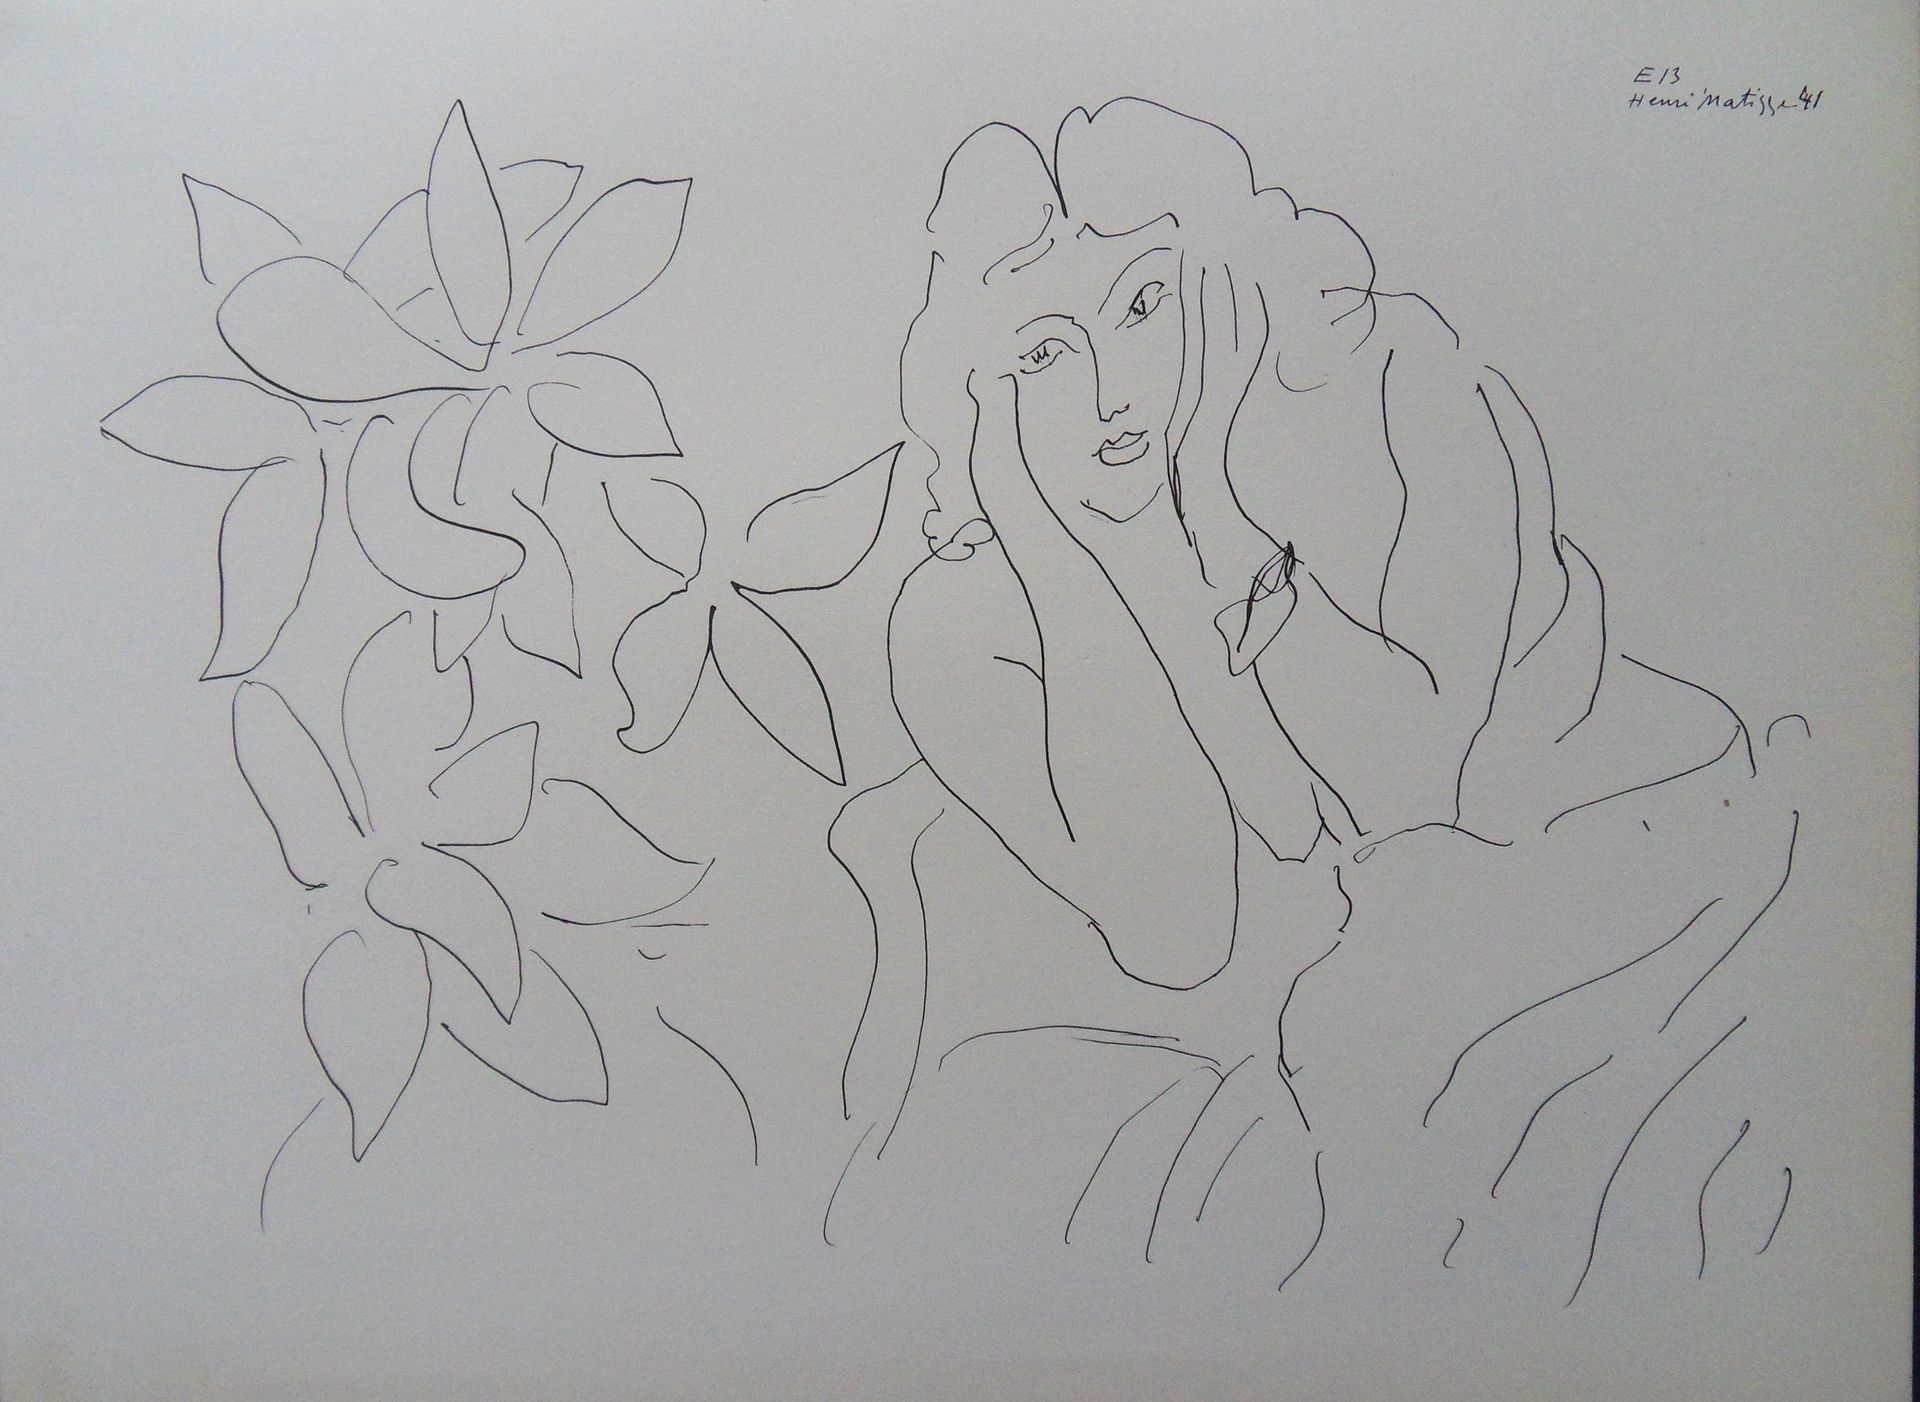 Henri MATISSE Henri Matisse (d'après) (1869-1954)

Jeune femme inquiète, 1943

L&hellip;